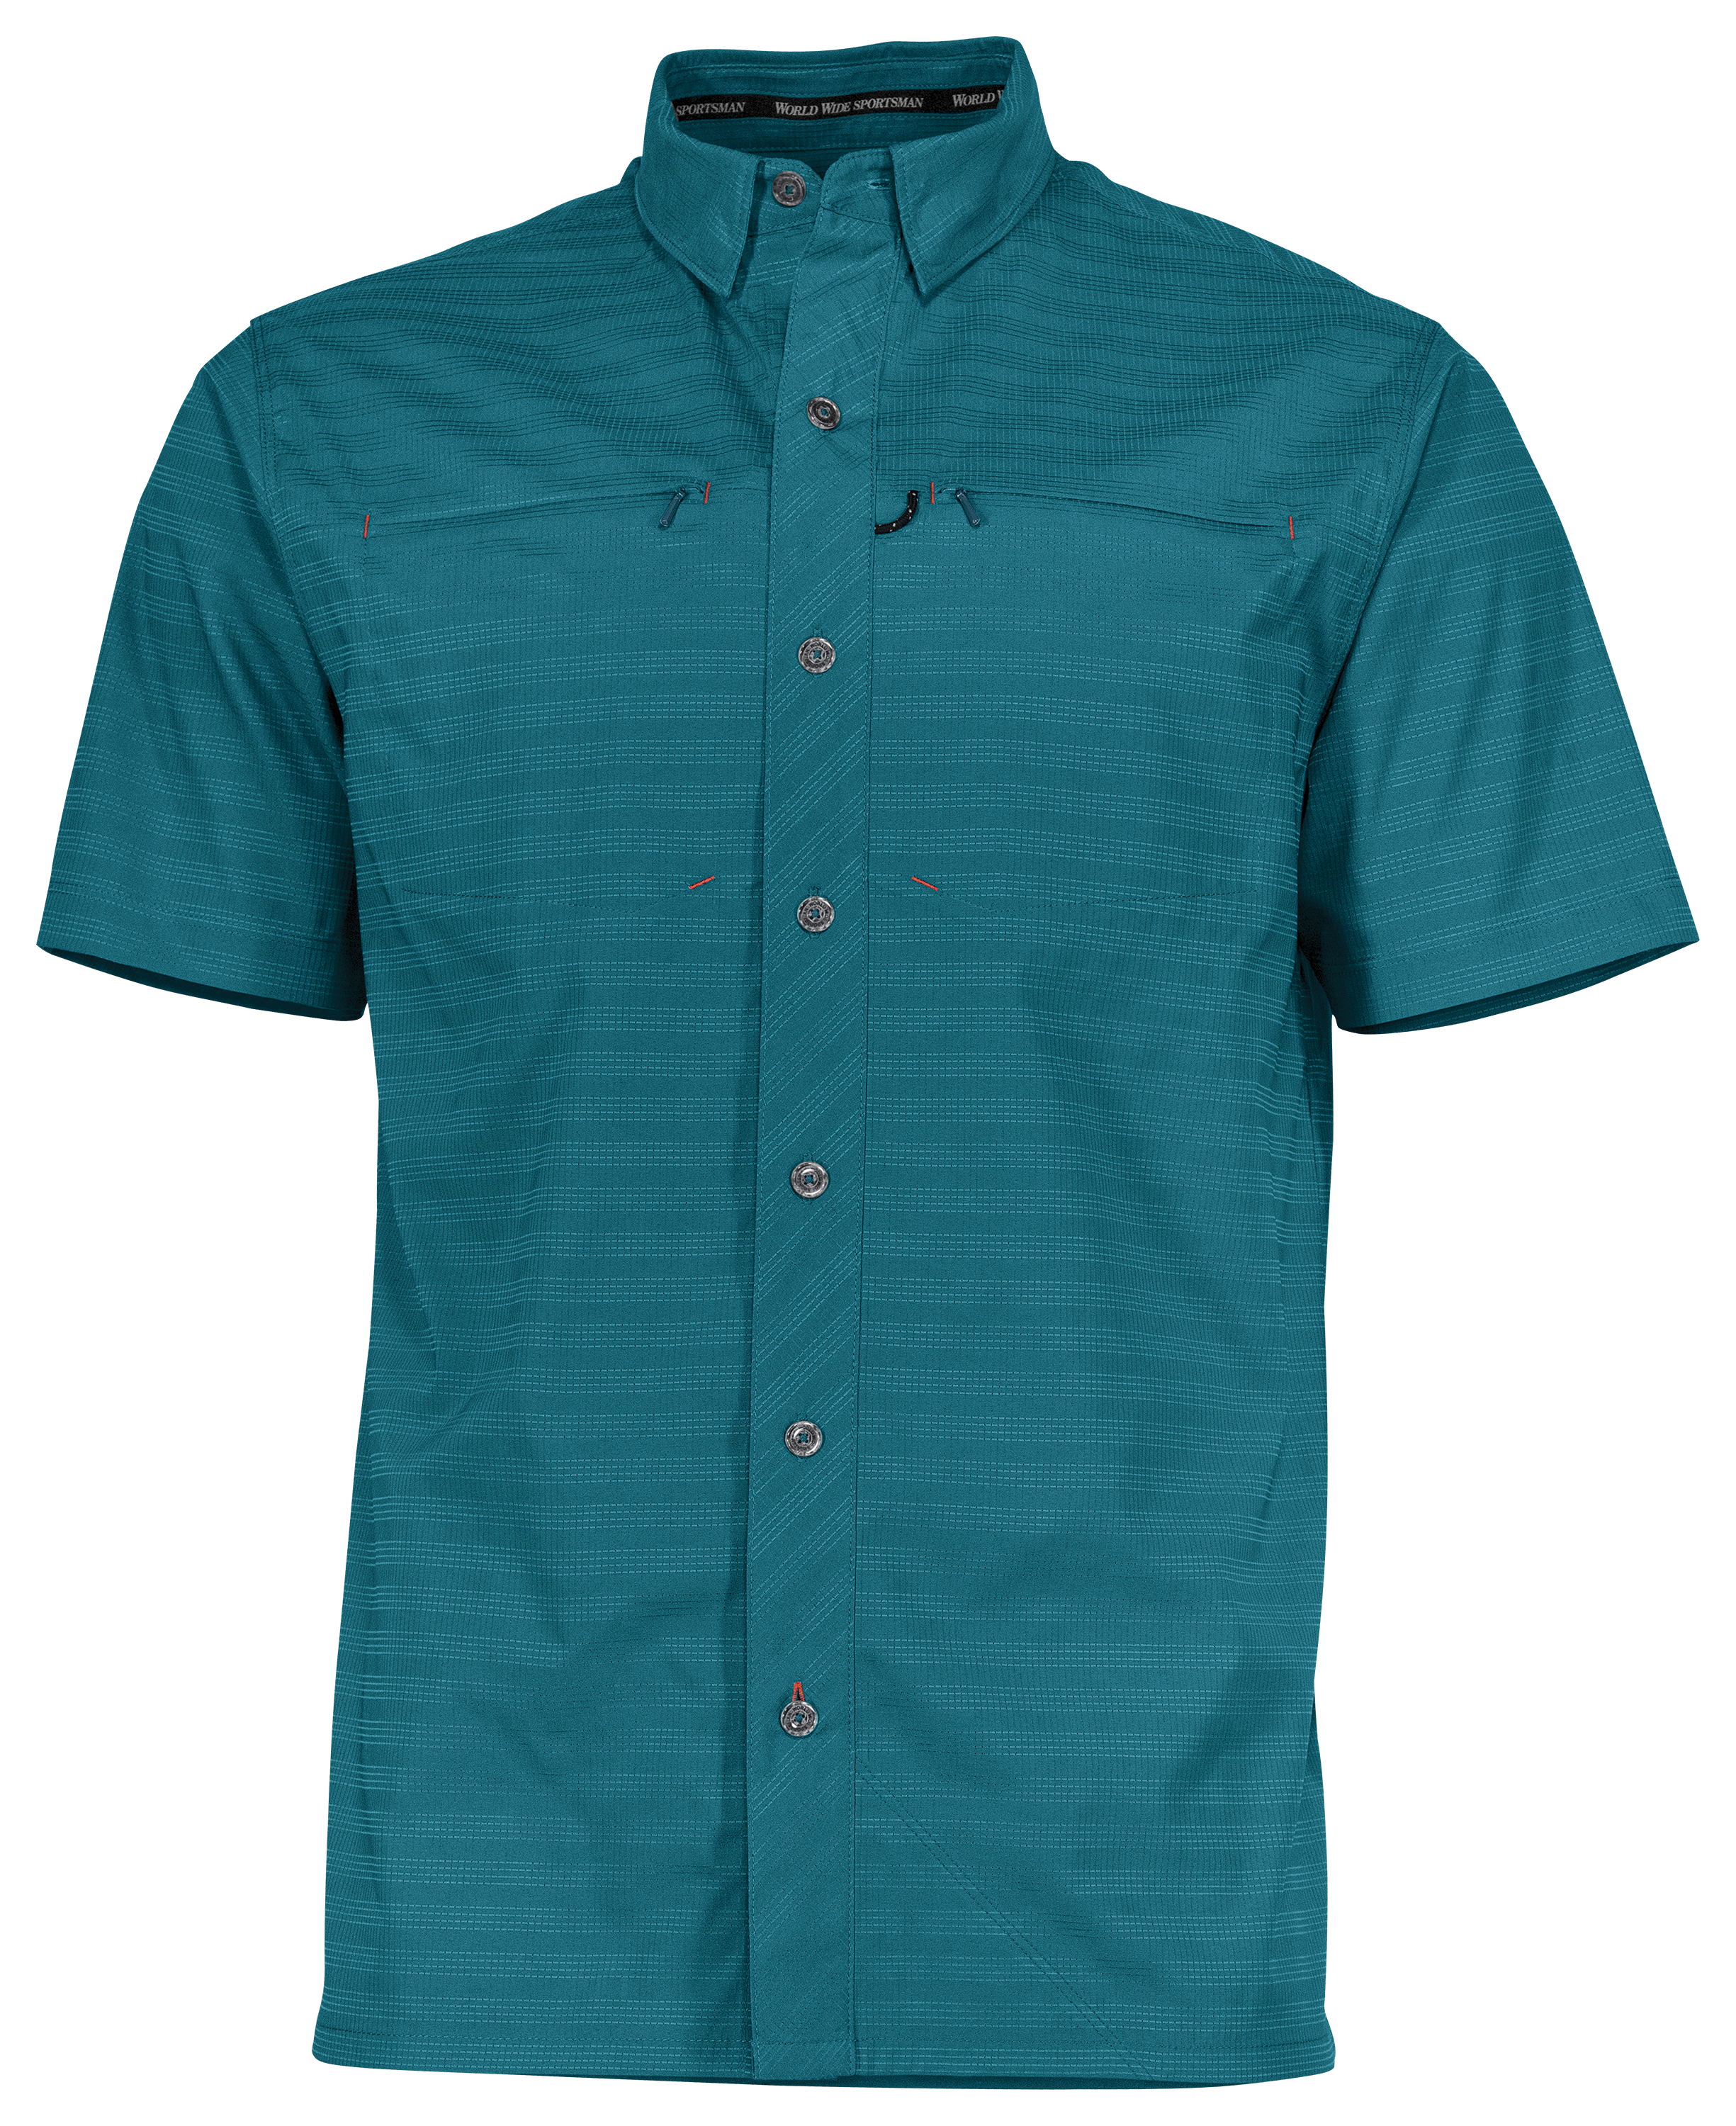 World Wide Sportsman Seacrest 2-Pocket Short-Sleeve Button-Down Shirt for Men